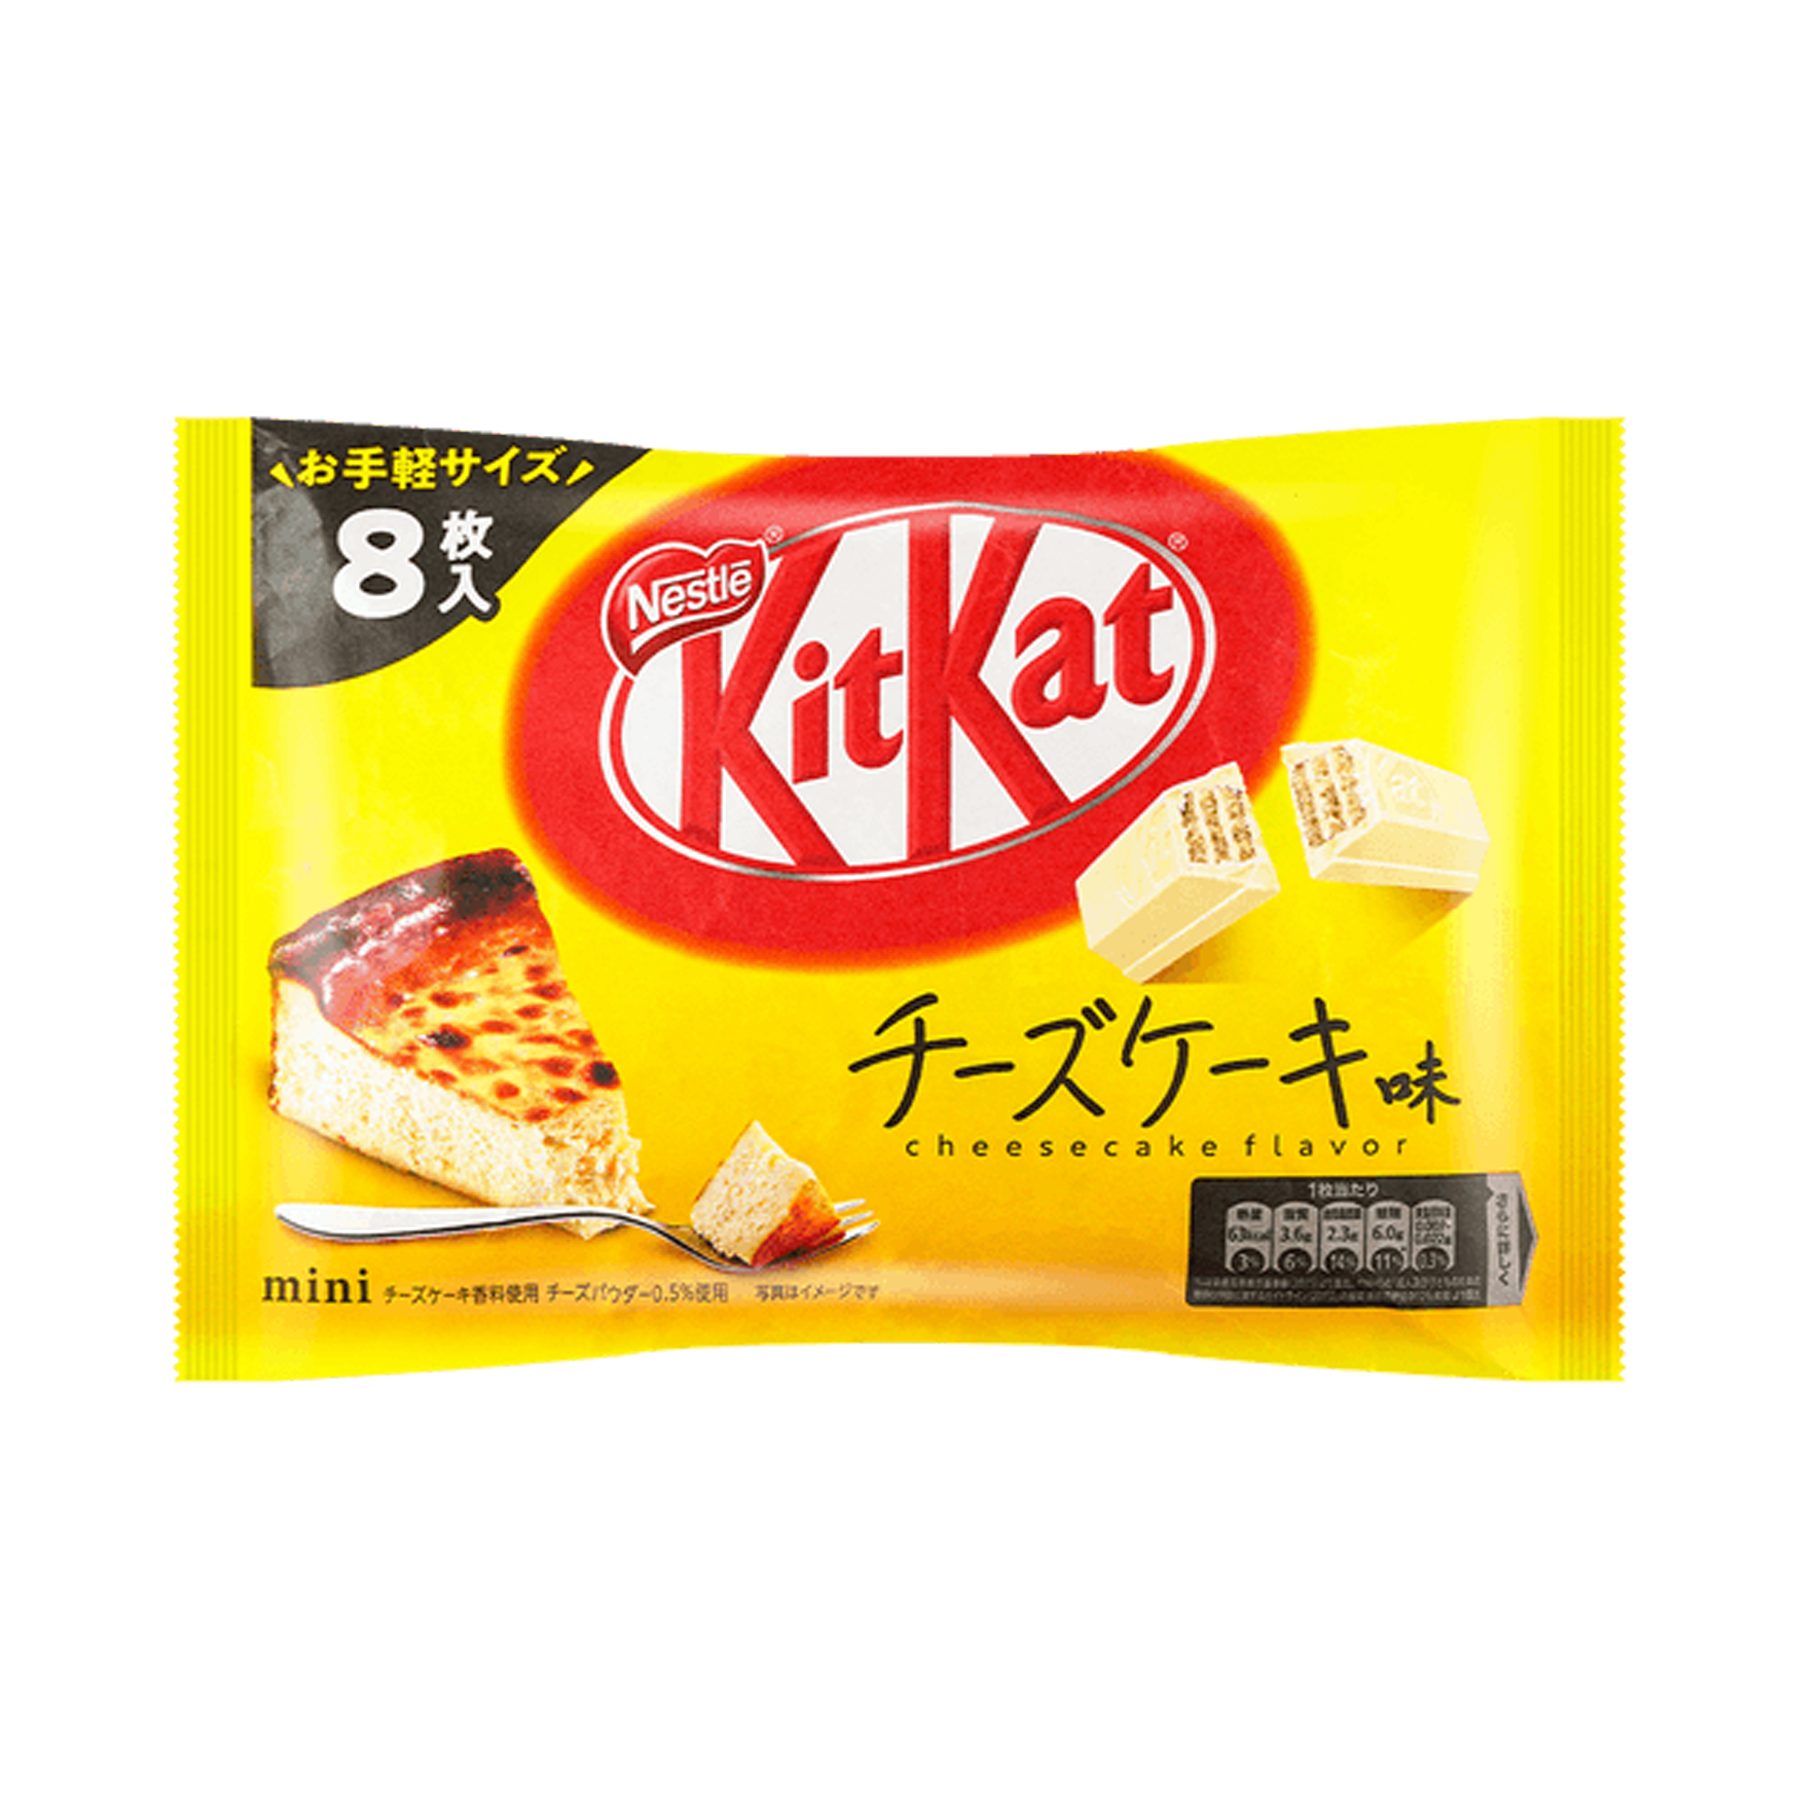 Kitkat Cheesecake Flavor